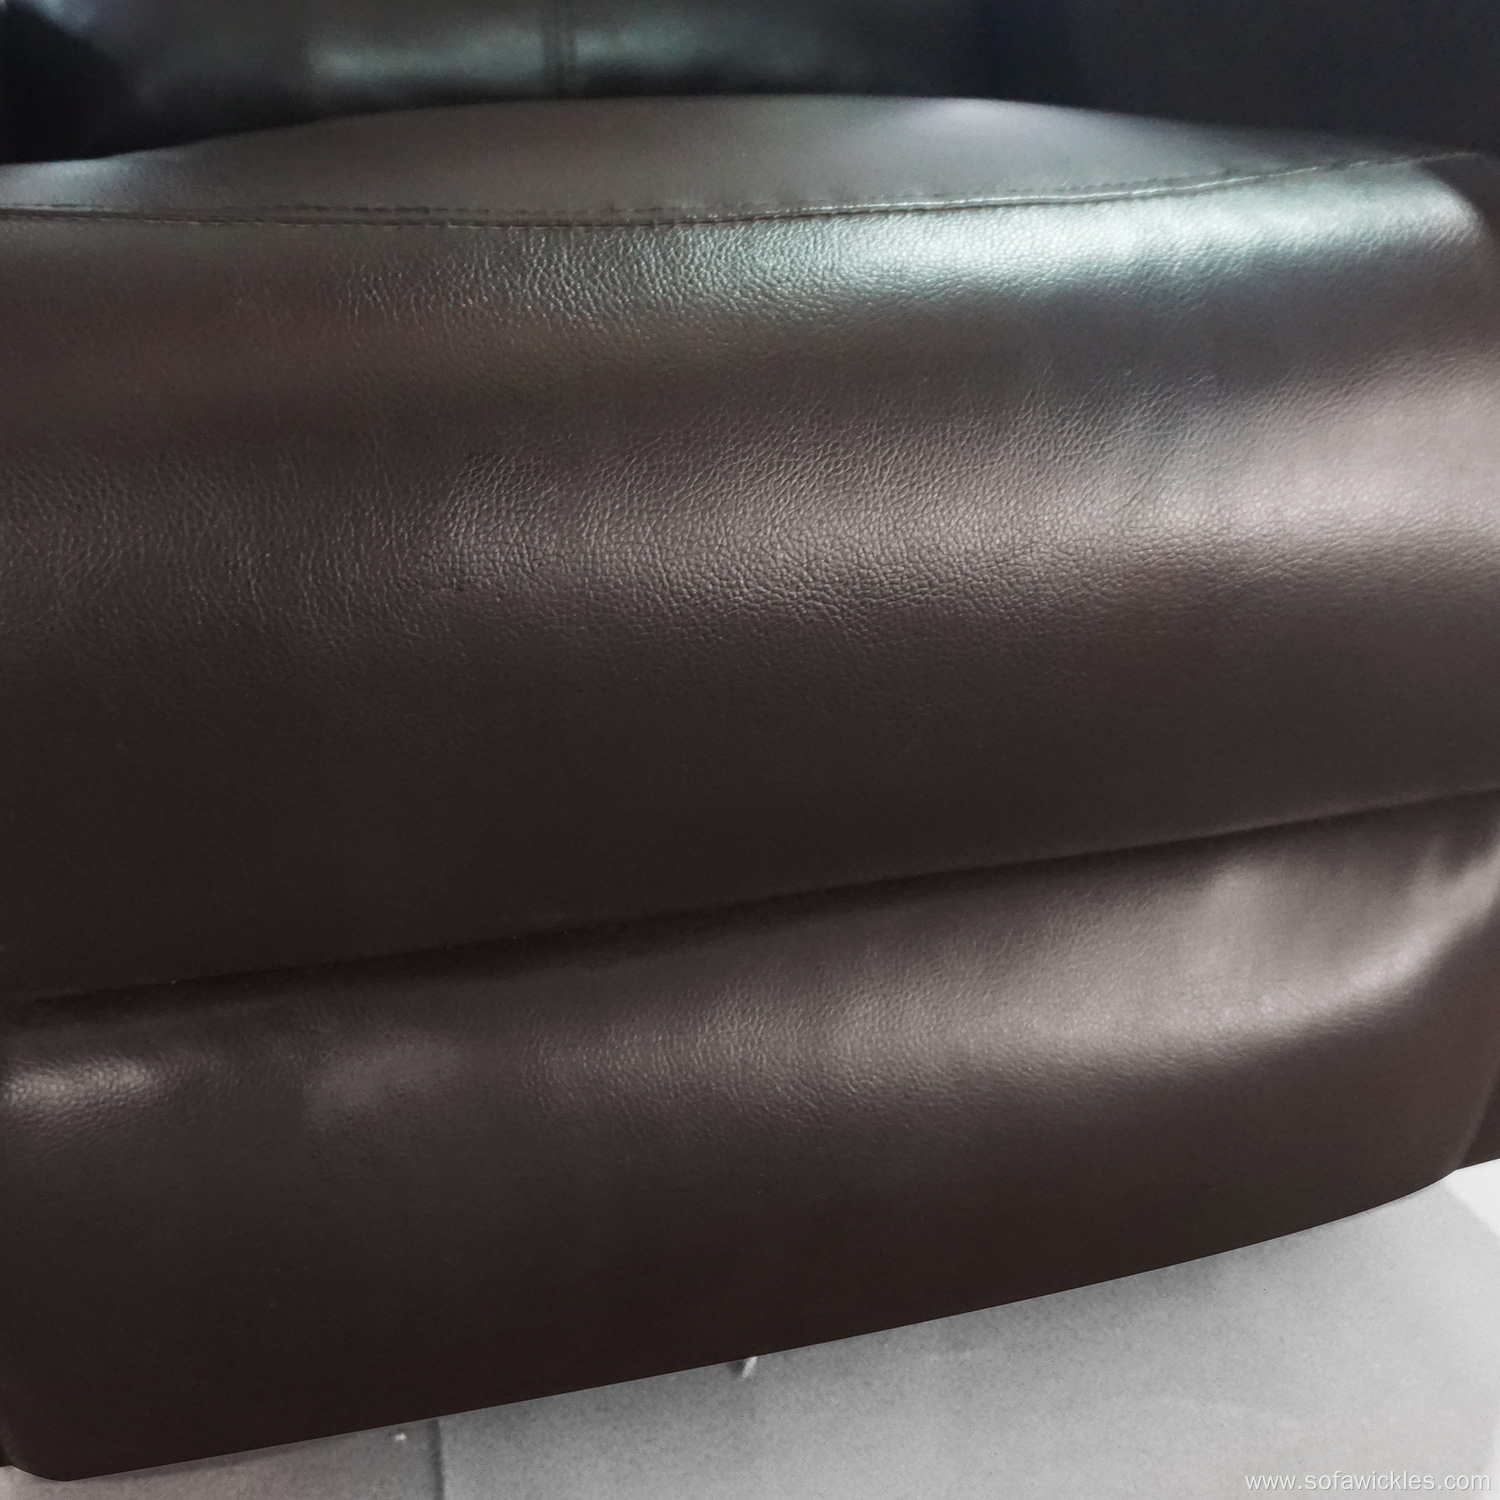 New Modern Leather Hotel Comfortable Single Leisure Sofa